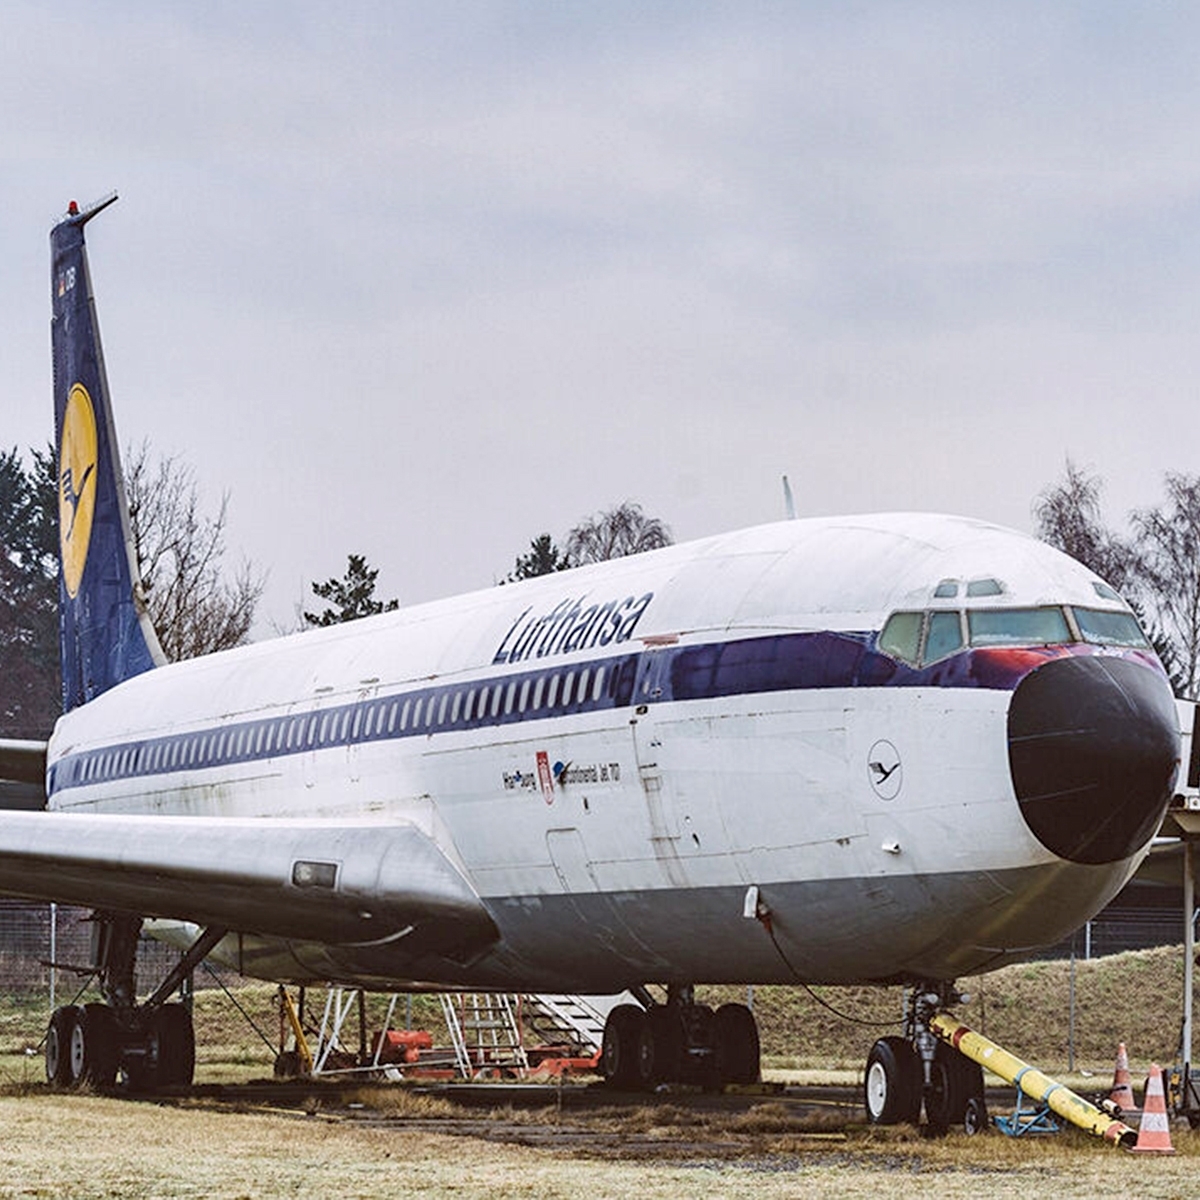 Aviationtag Lufthansa - Boeing 707 - D-ABOD Blue